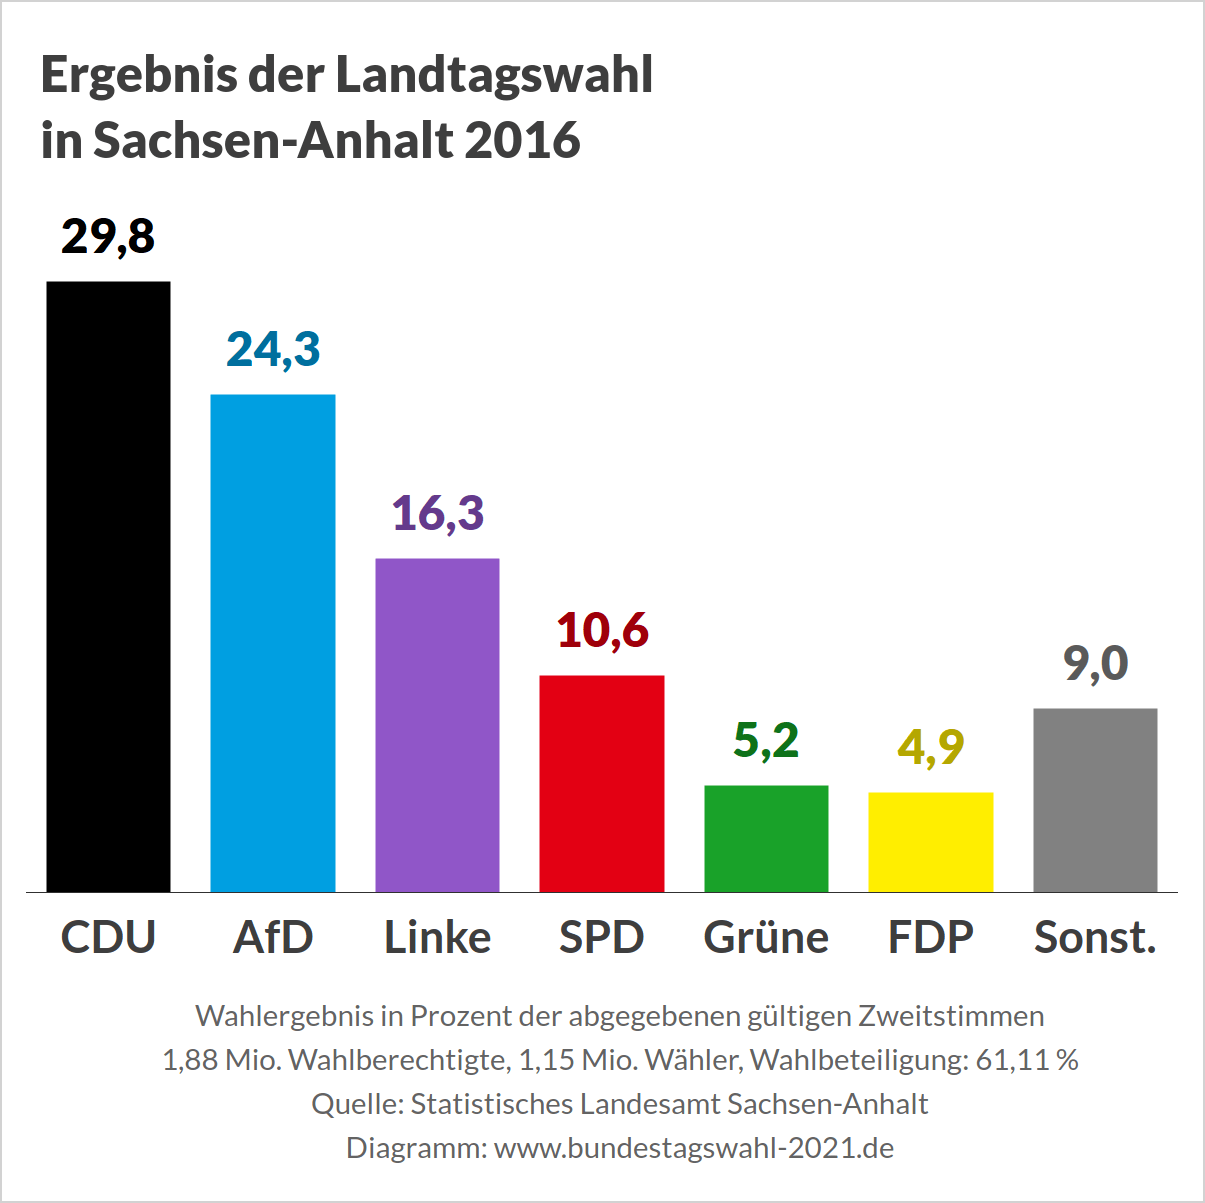 Landtagswahl 2021 in Sachsen-Anhalt - Ausgangslage (Ergebnis der Landtagswahl 2016)